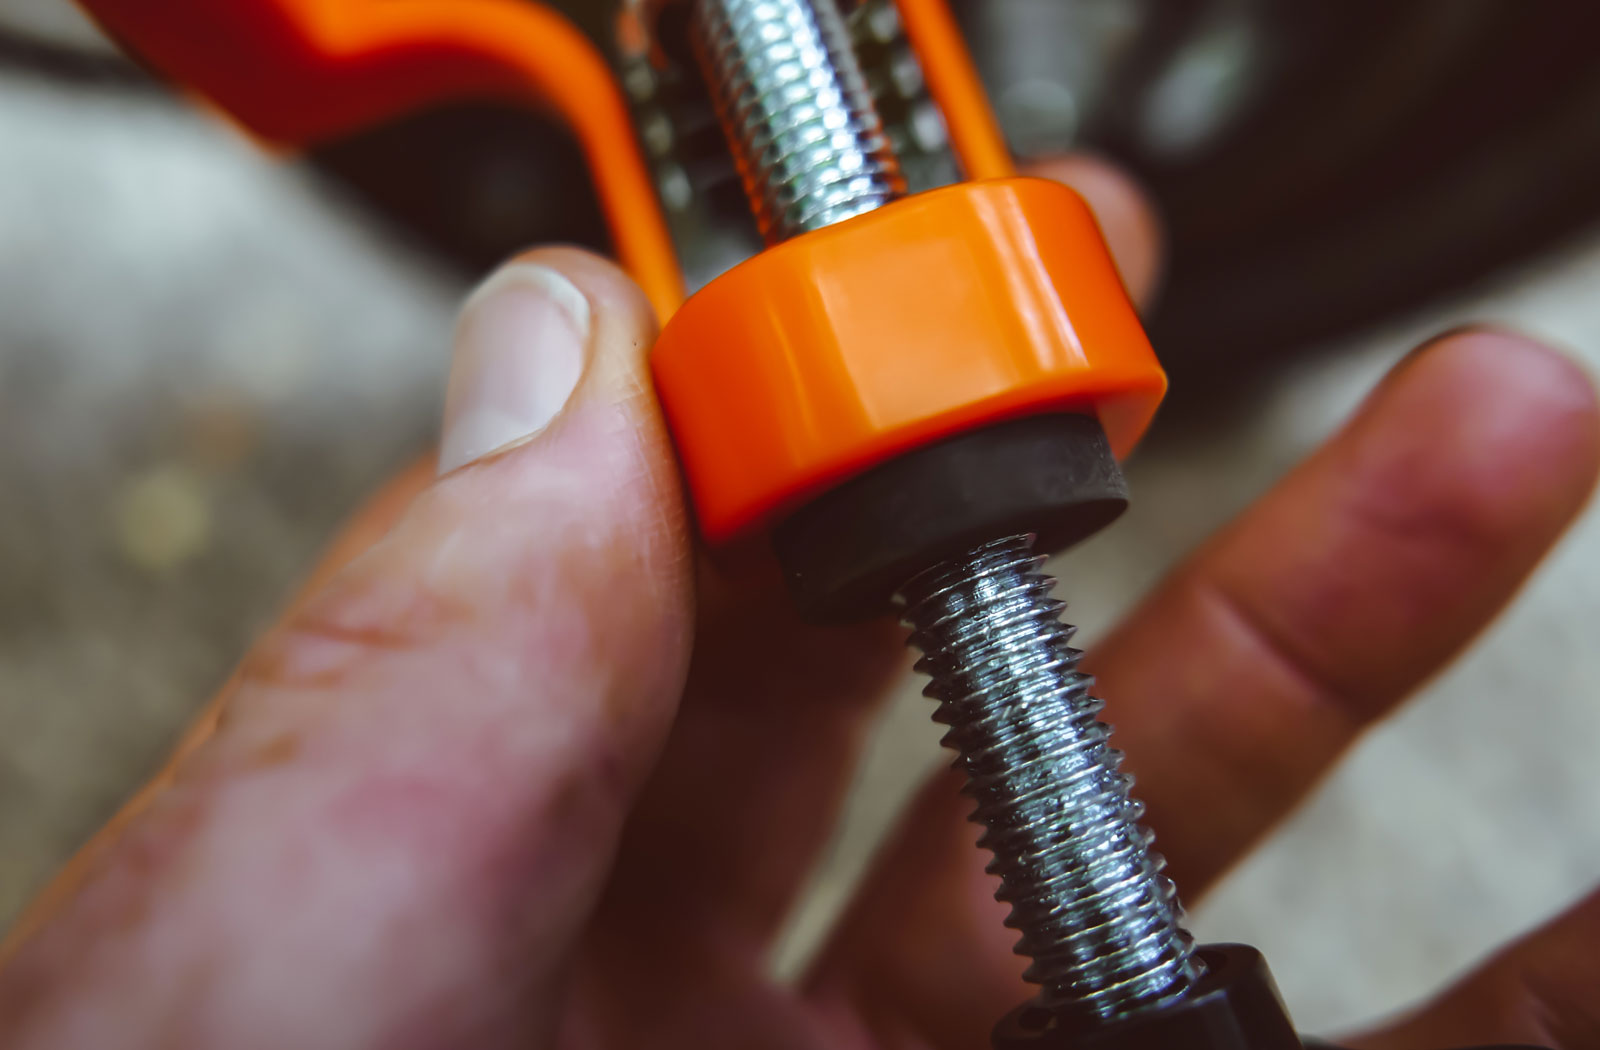 DIY motorcycle chain tension adjustment tool